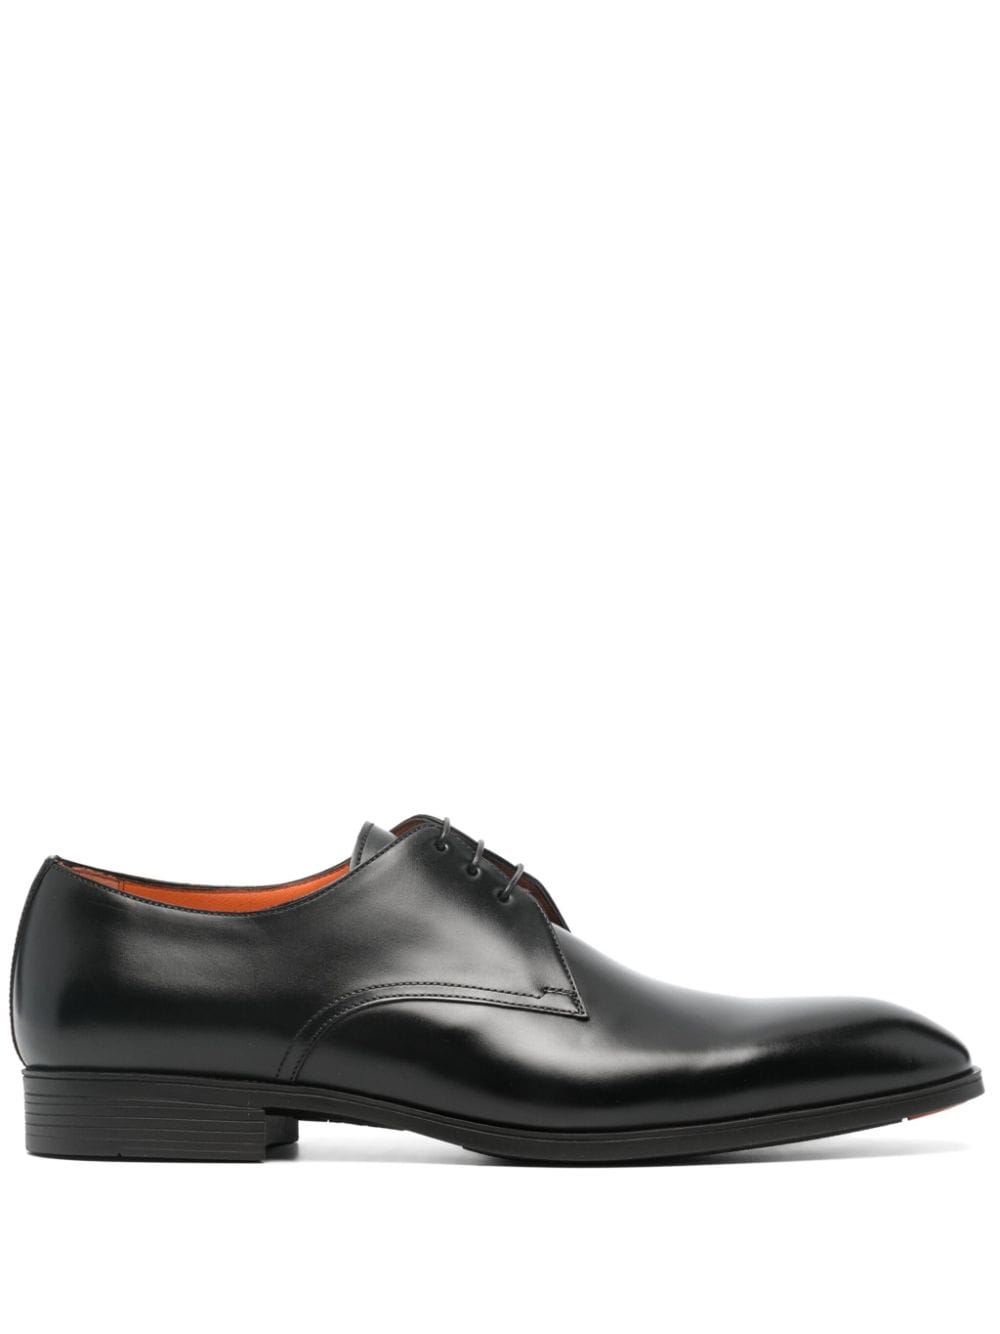 Santoni round-toe leather Oxford shoes - Black von Santoni